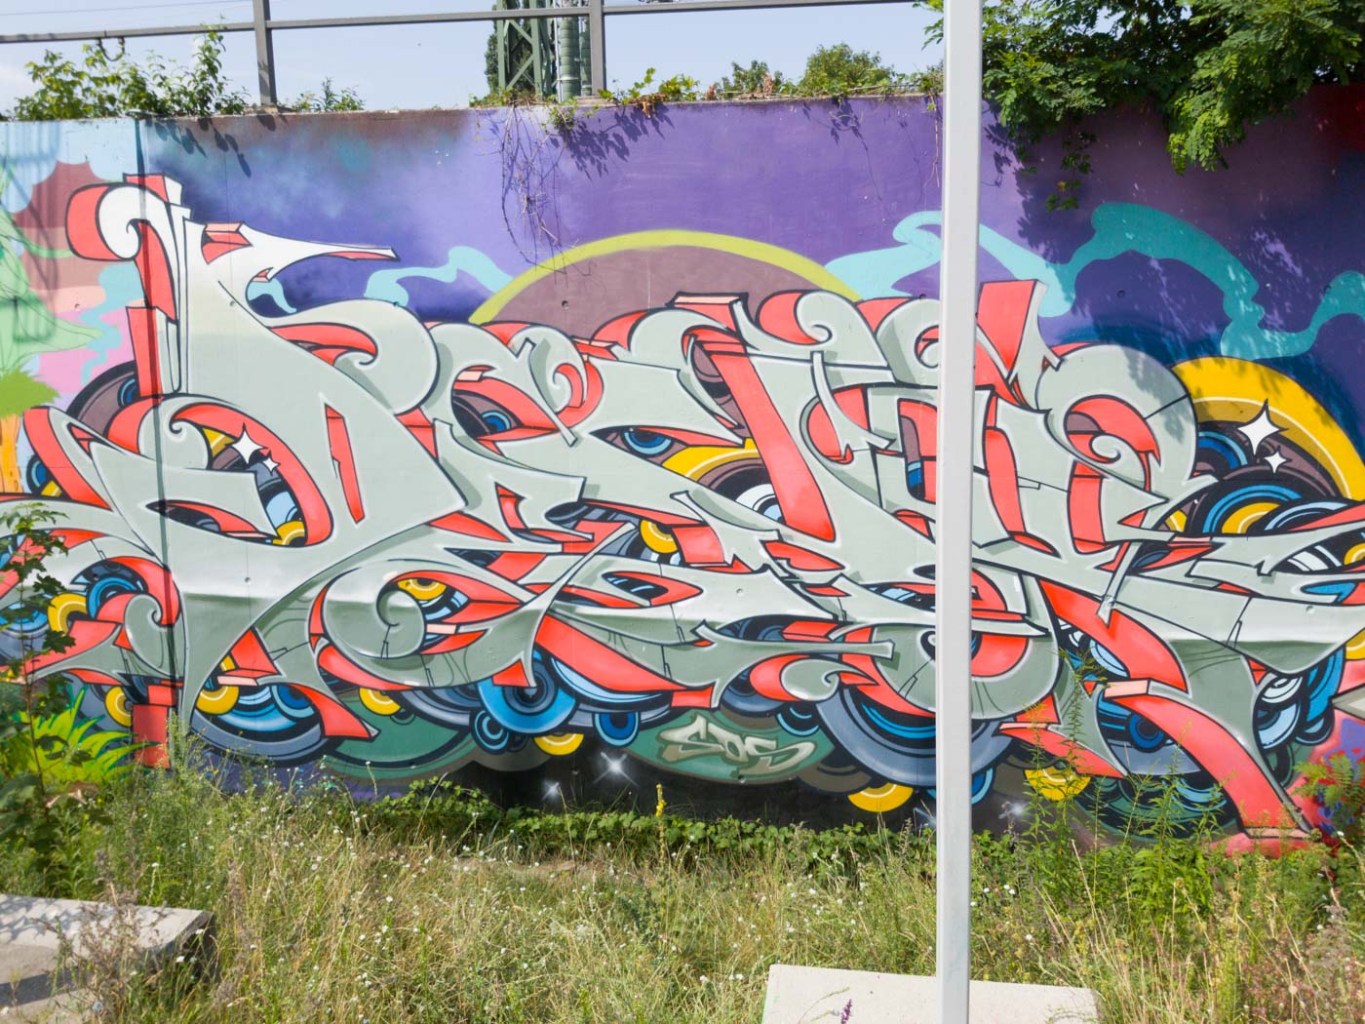 a graffiti covered wall